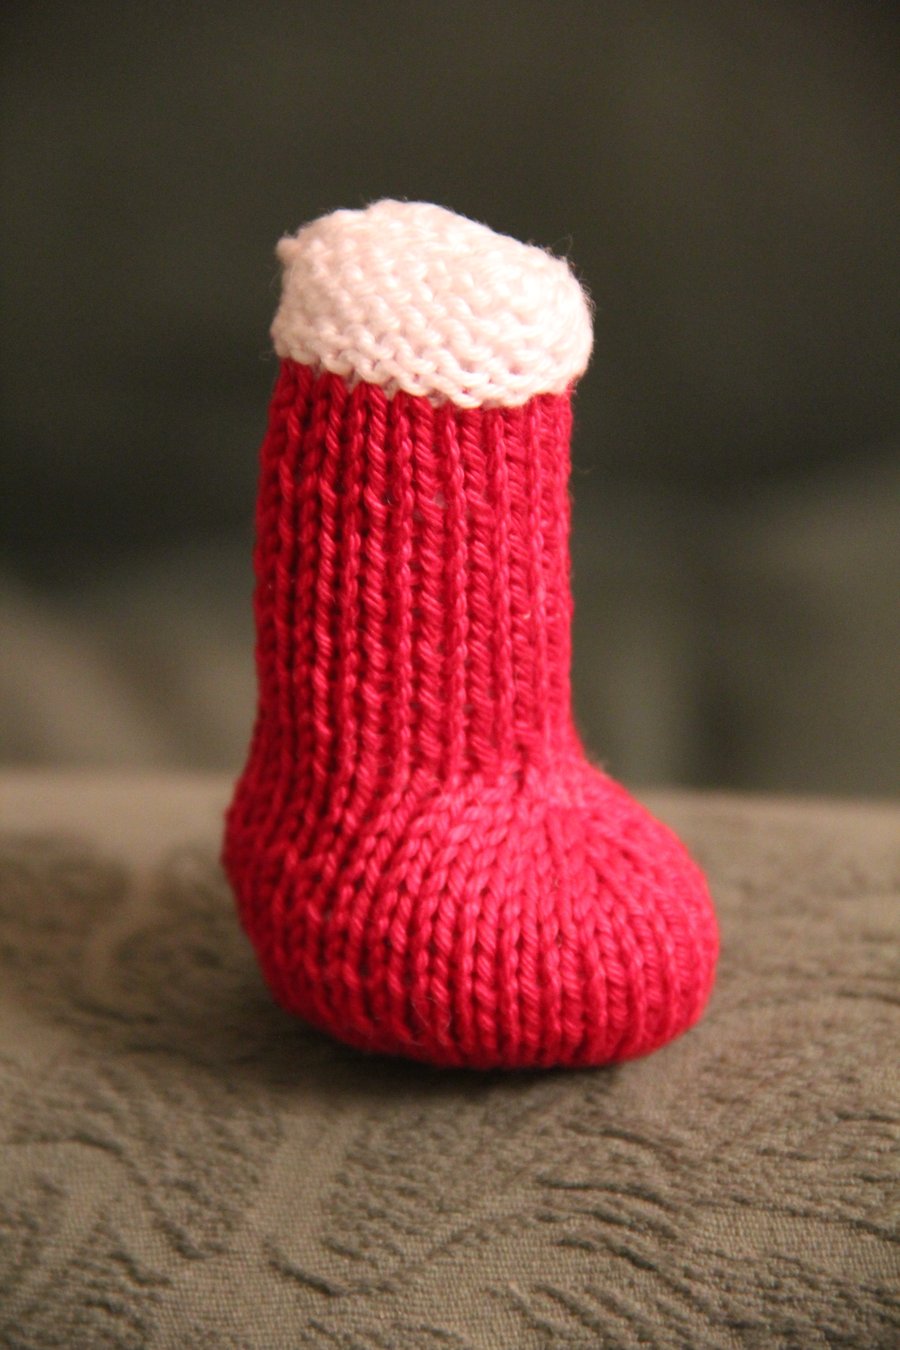 Hand Knitted Christmas Stocking Catnip Toy